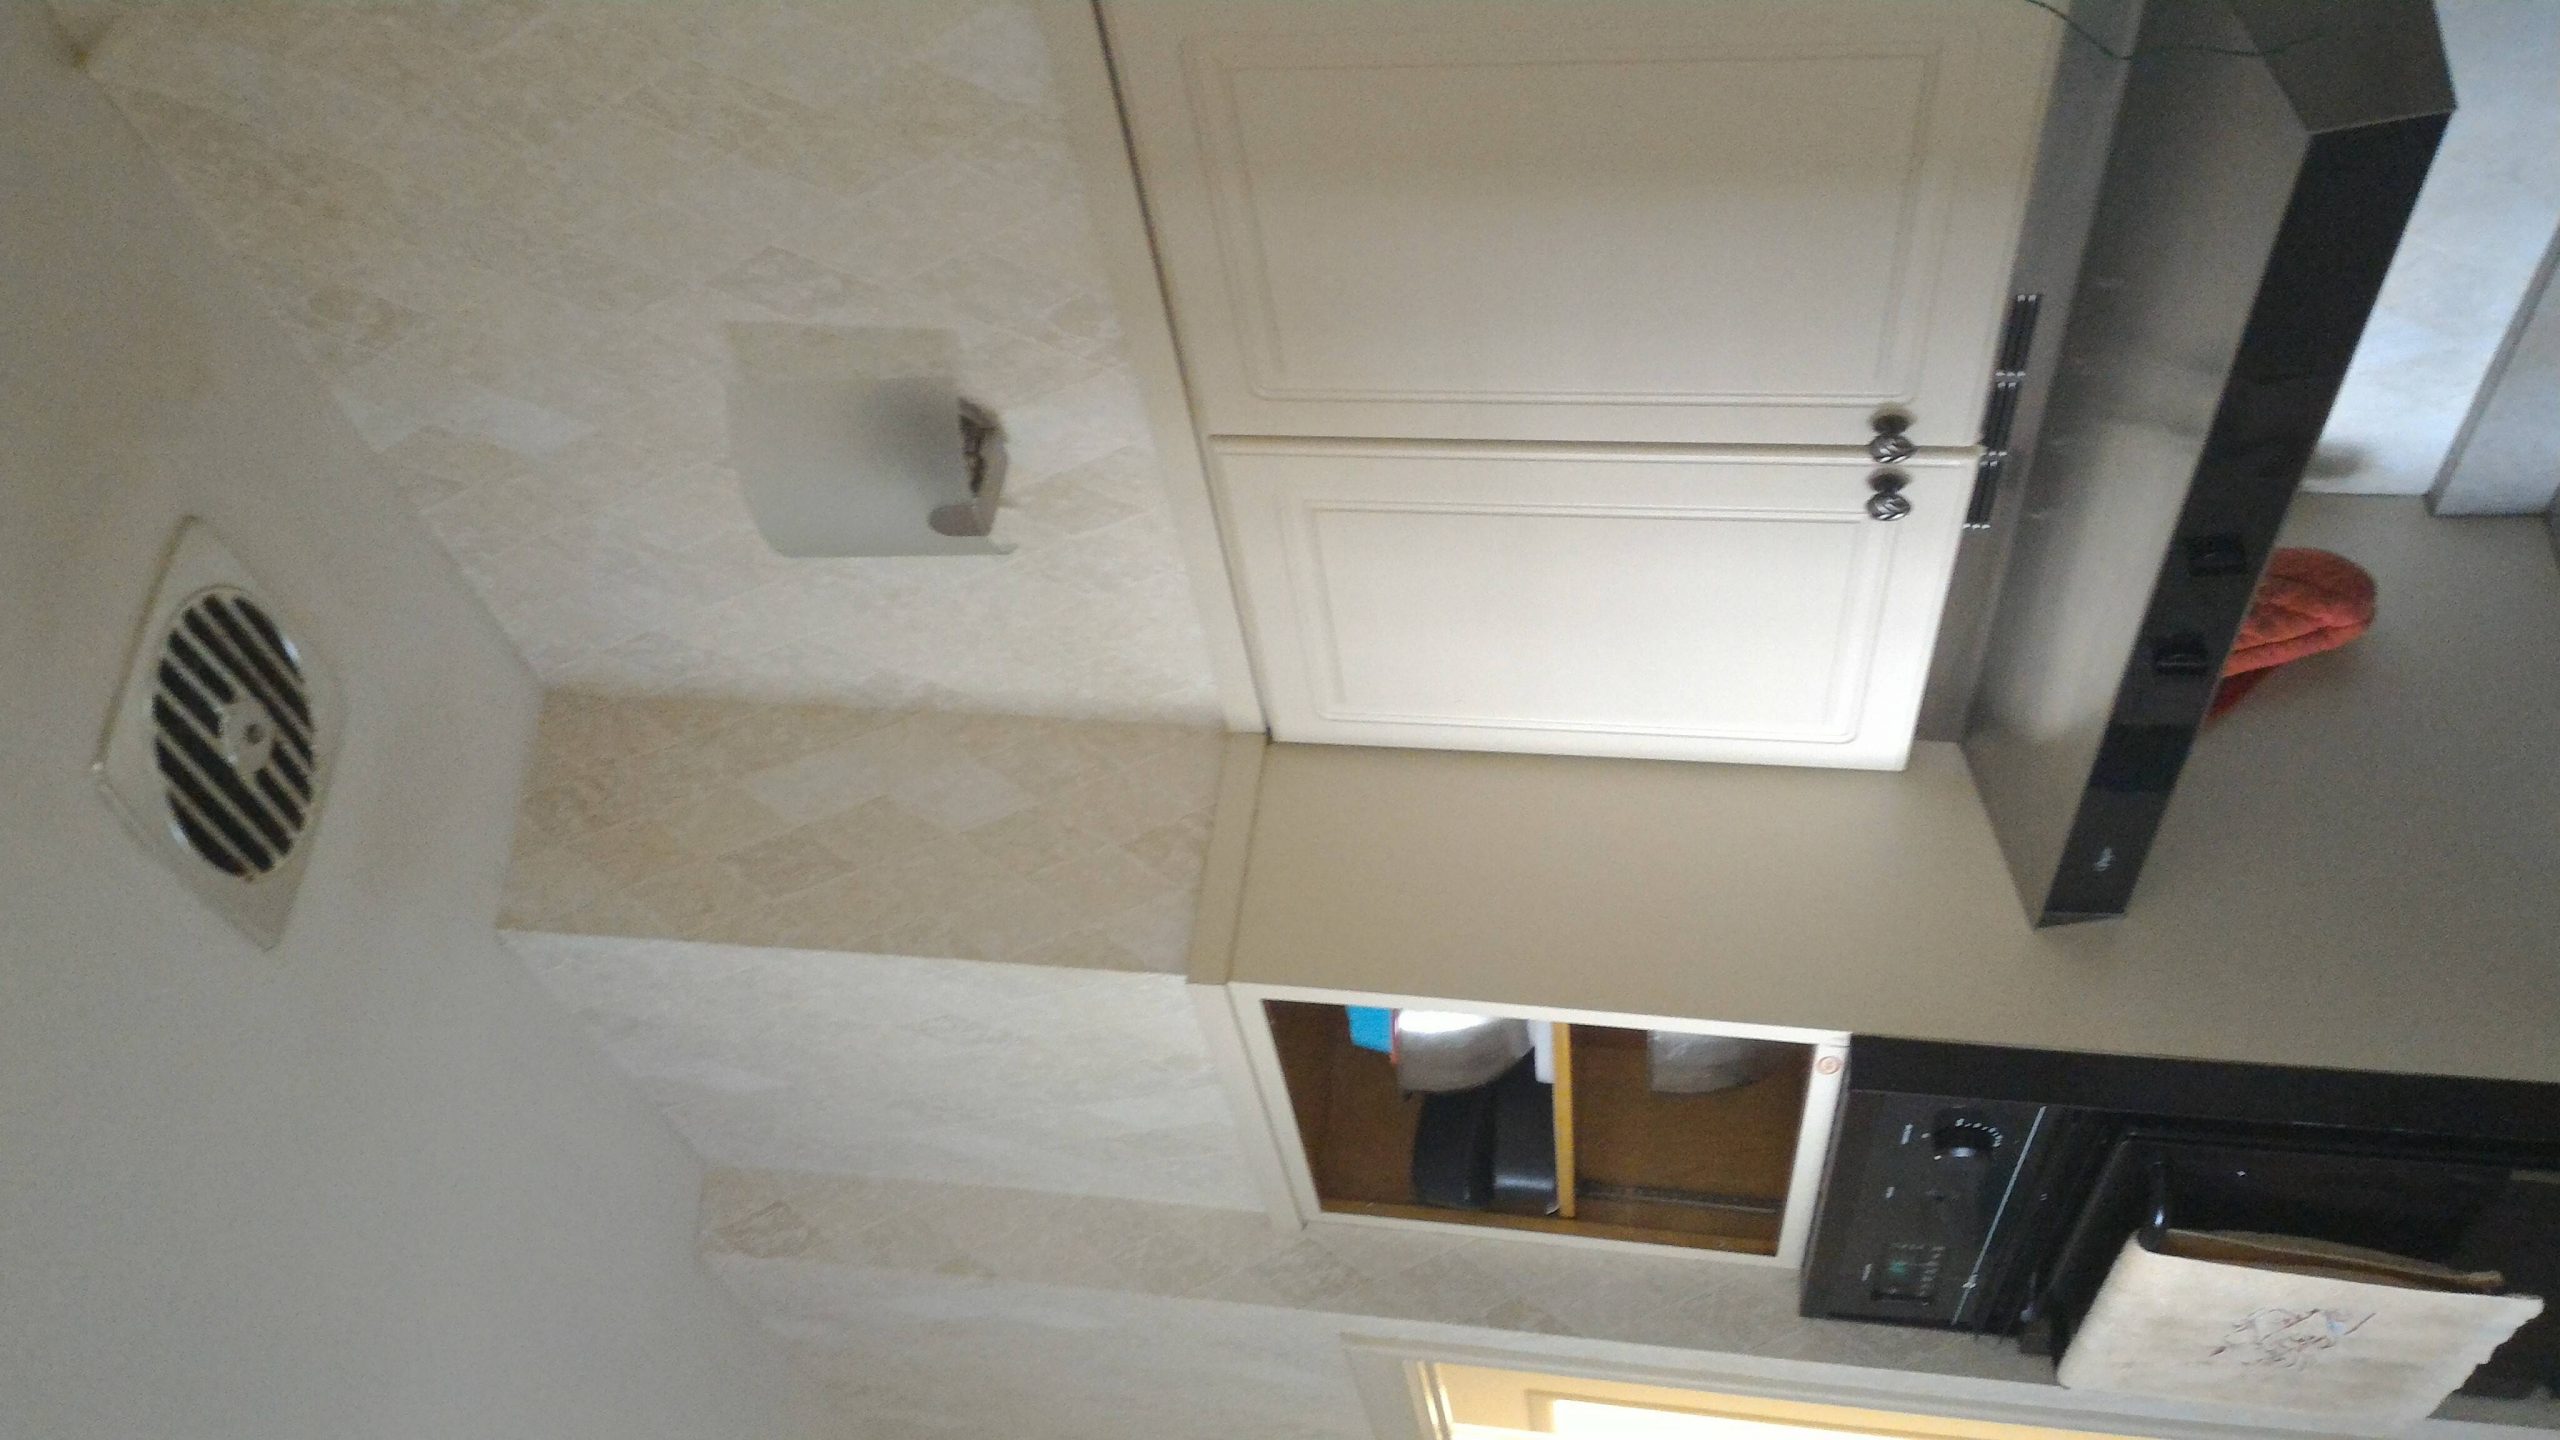 Ceiling Exhaust Fan In Kitchen Home Improvement Stack Exchange regarding dimensions 4096 X 2304